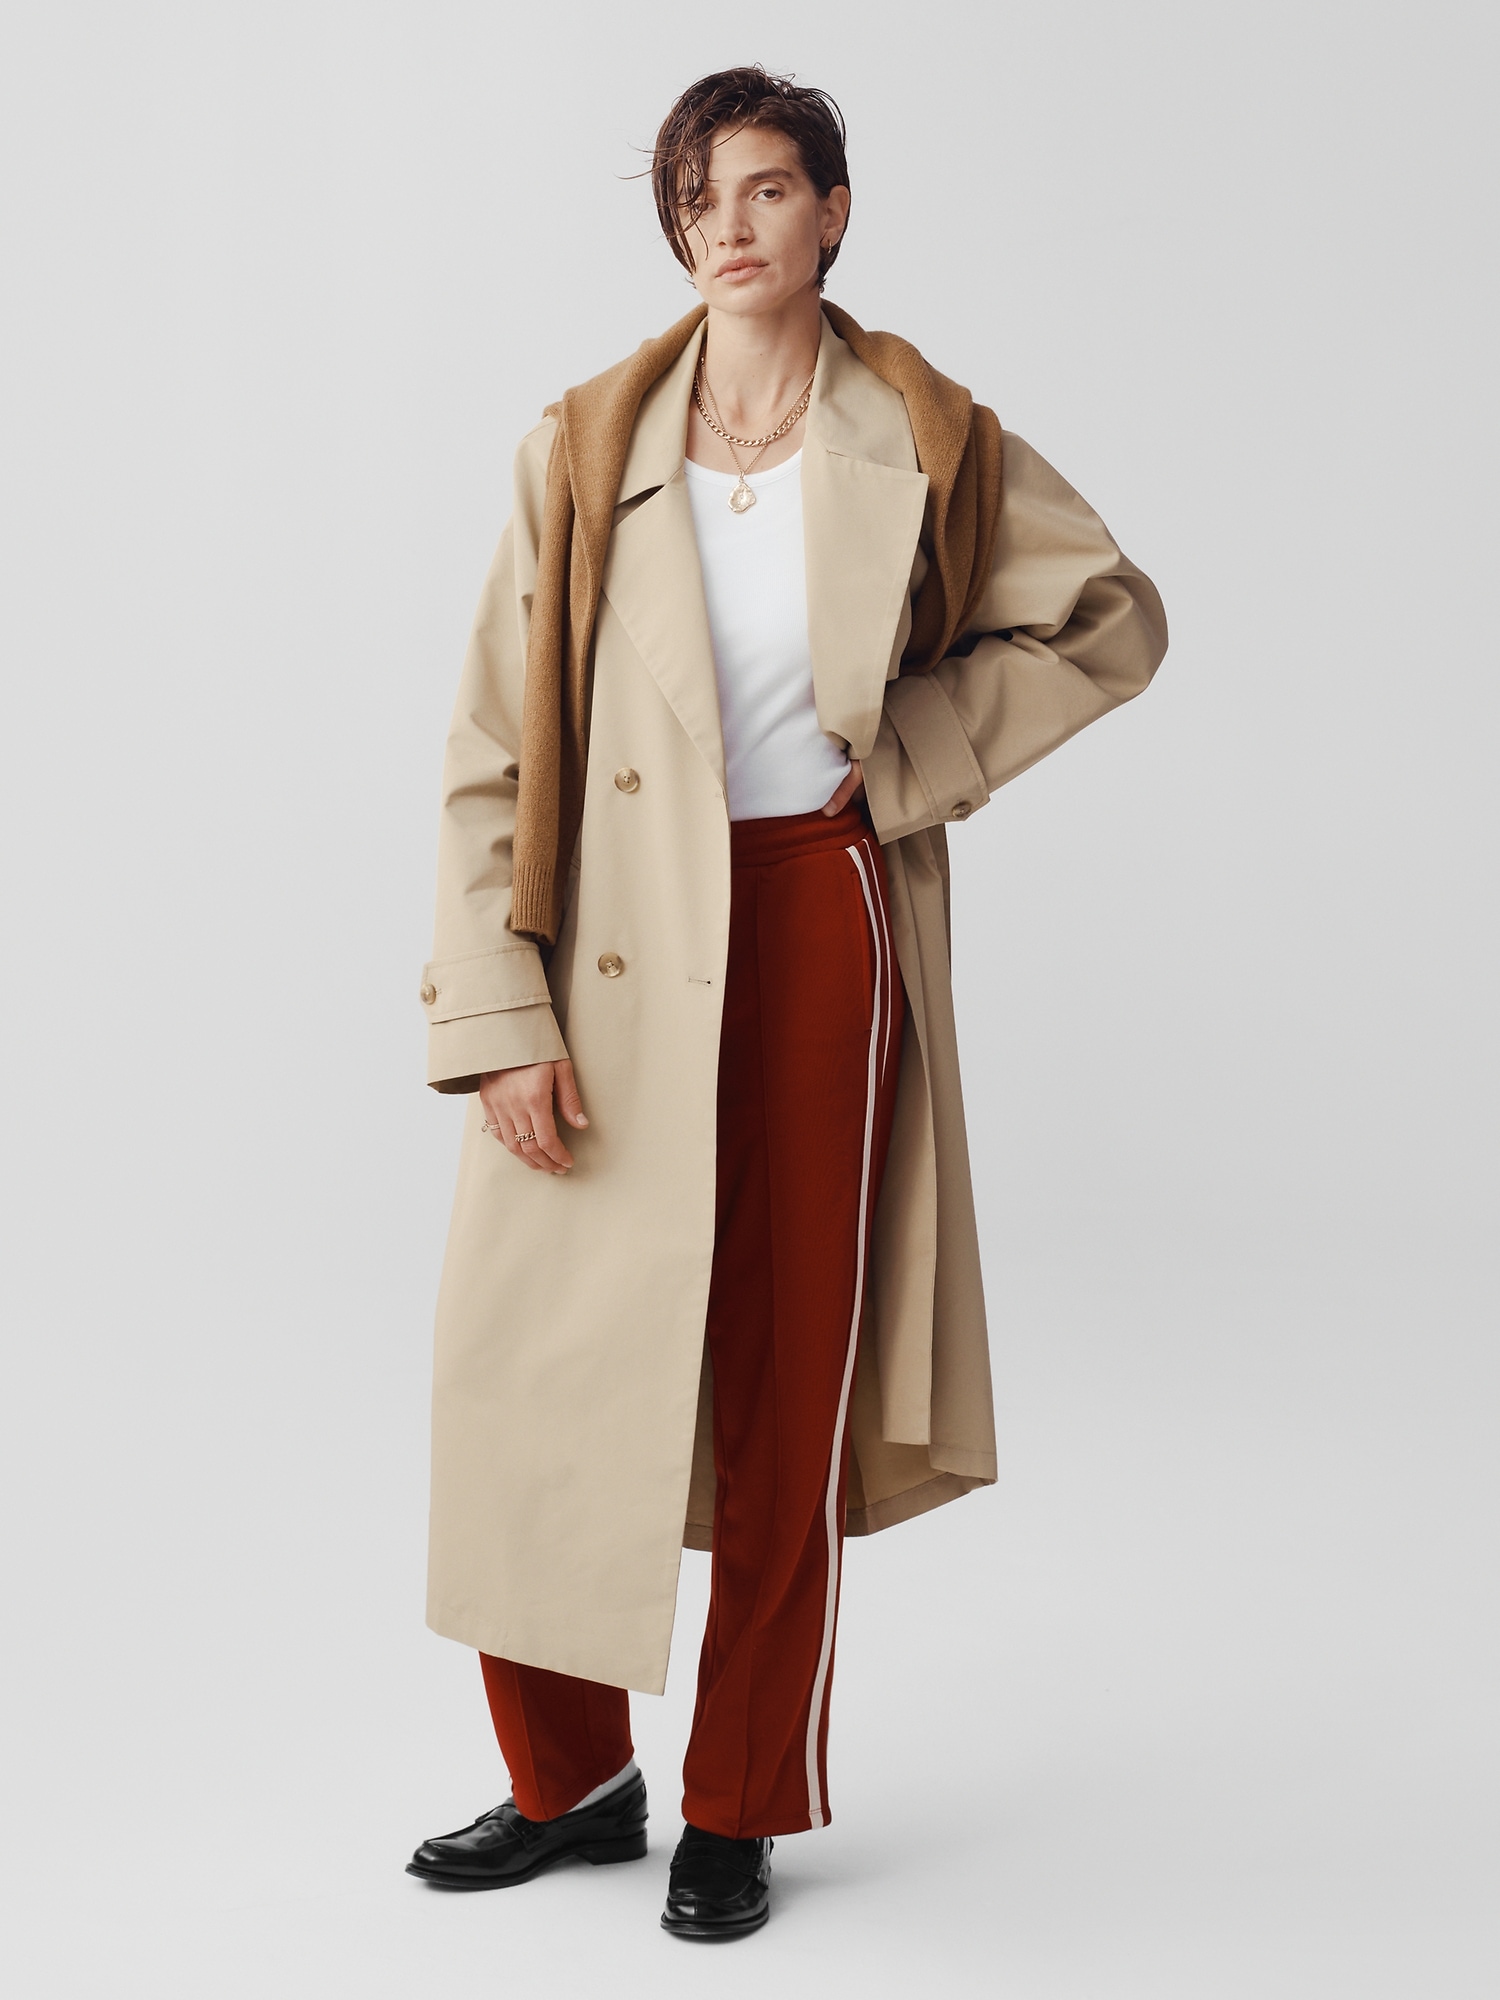 Kcocoo Womens Artificial Wool Coat Trench Jacket Ladies Warm Long Overcoat  Outwear Navy XL 